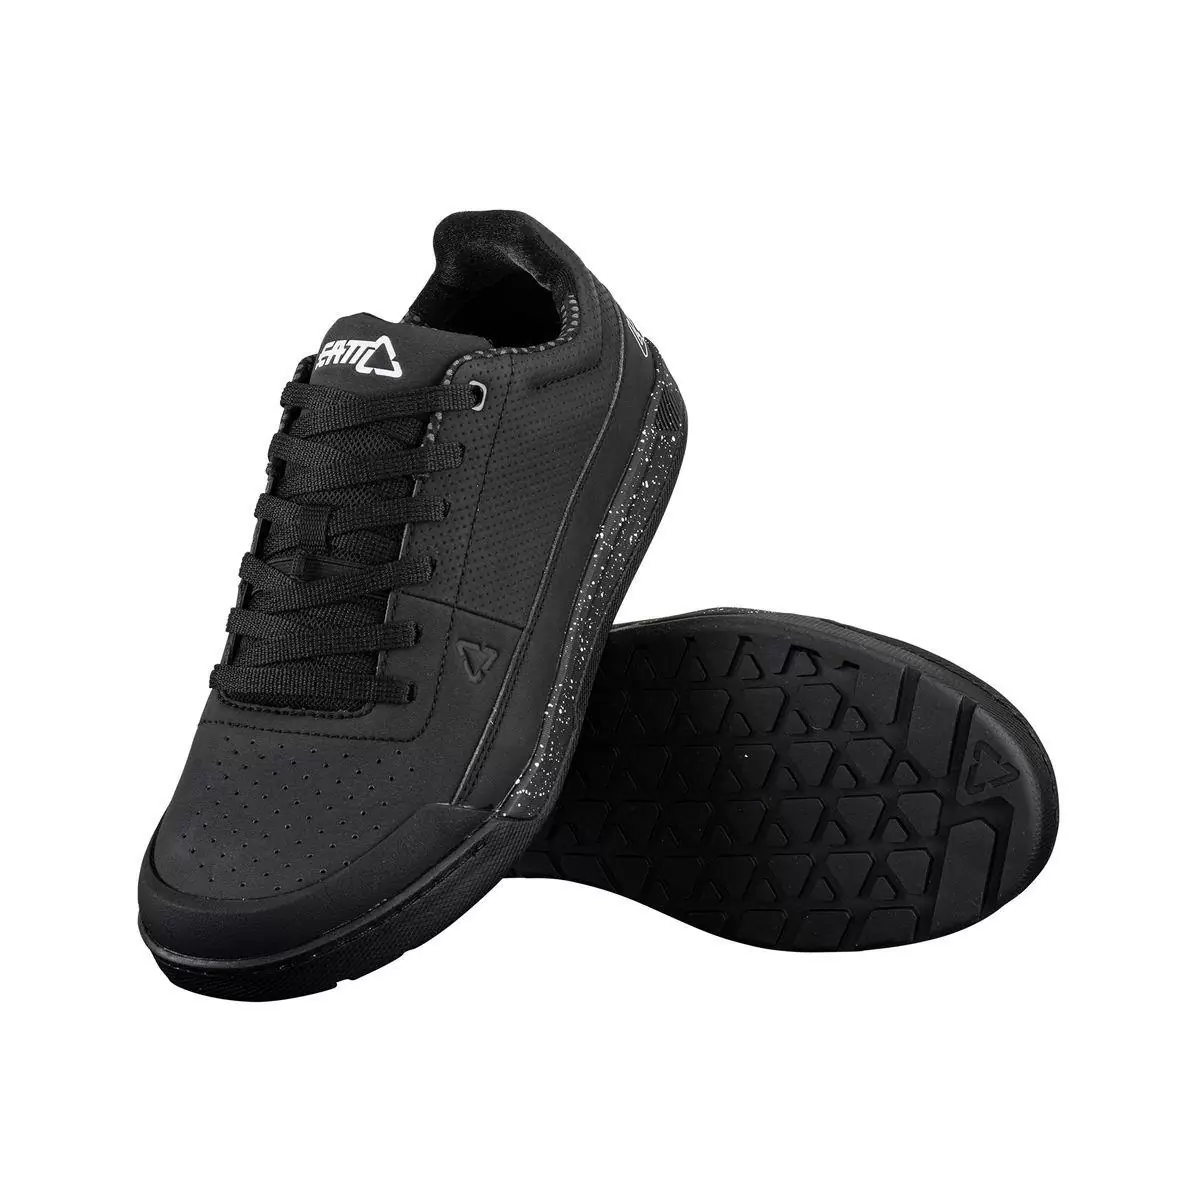 Mtb Shoes 2.0 Flat Black Size 41.5 #5